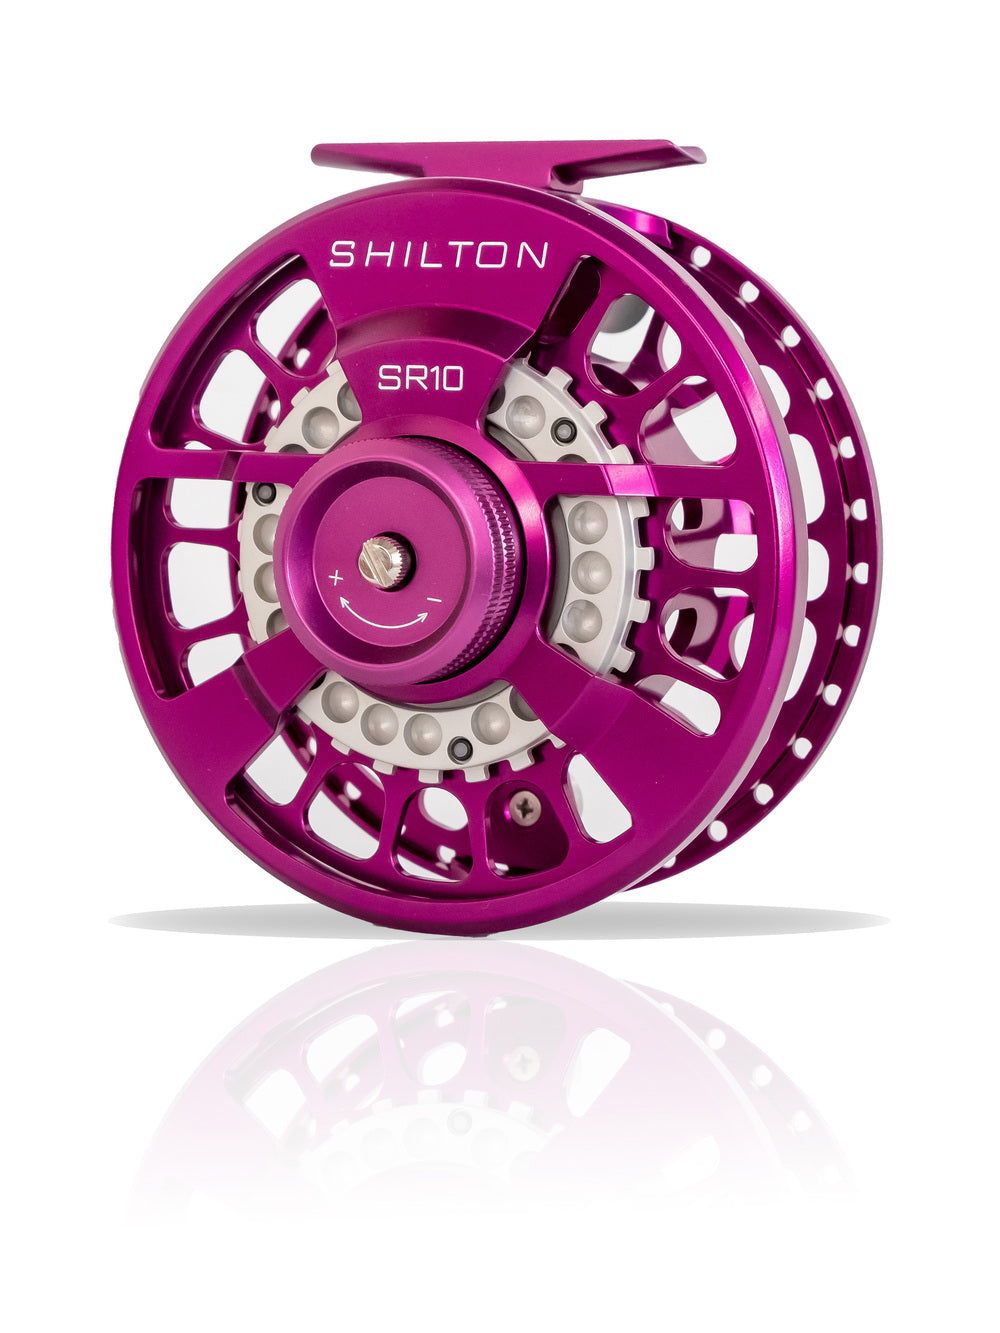 Shilton SR10 Purple Reel (10-11wt) - NEW!